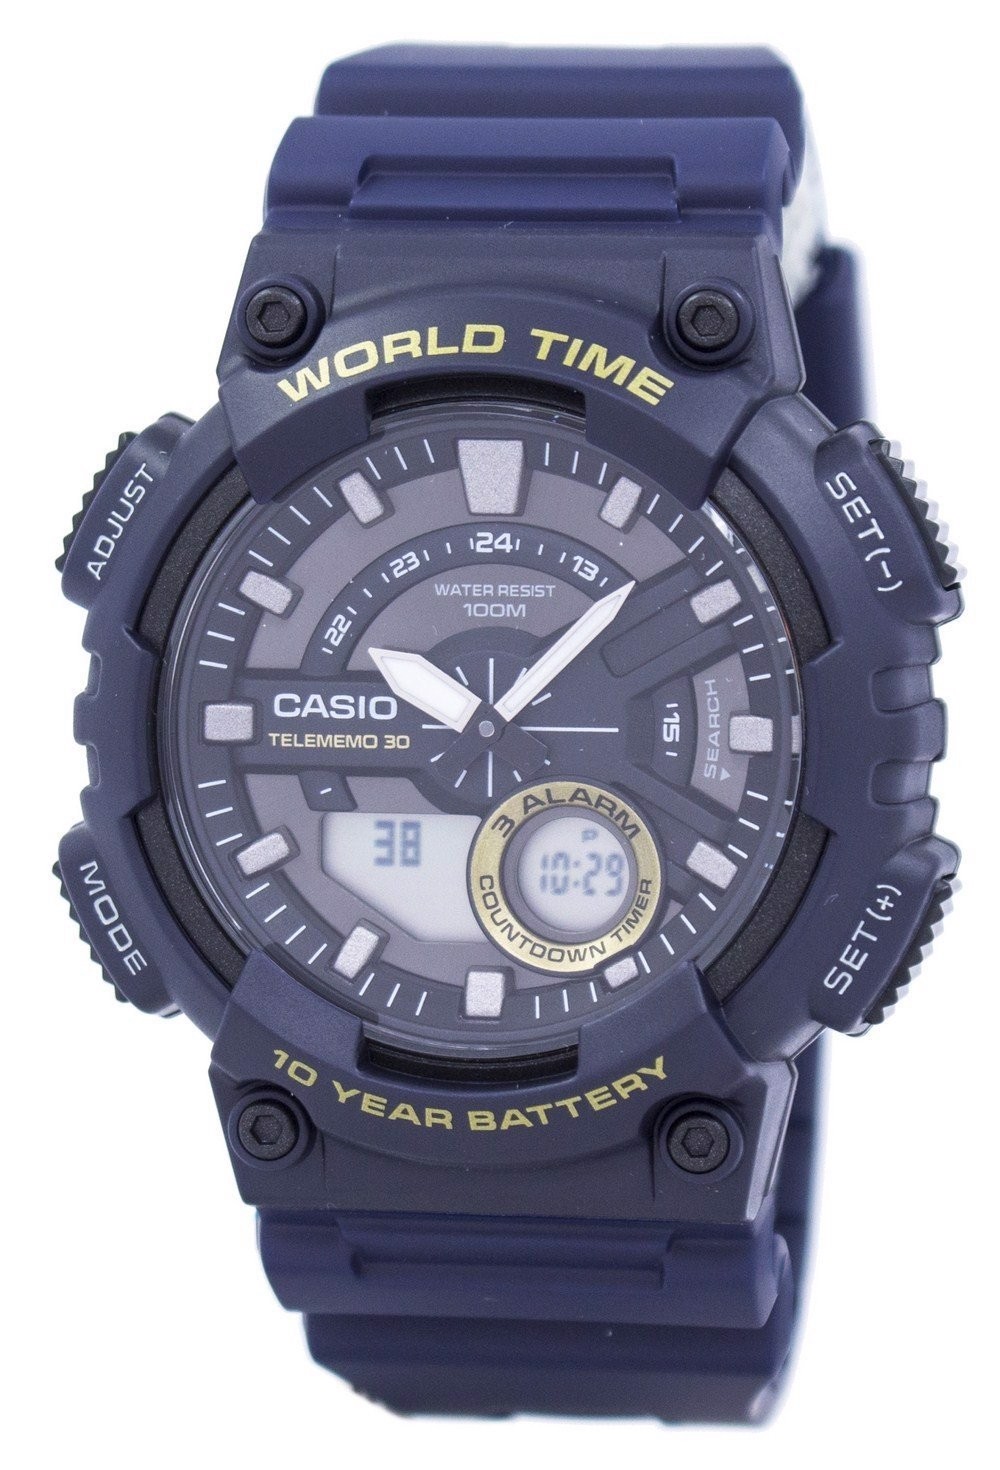 Khám phá đồng hồ Casio AEQ-110W-2AVDF